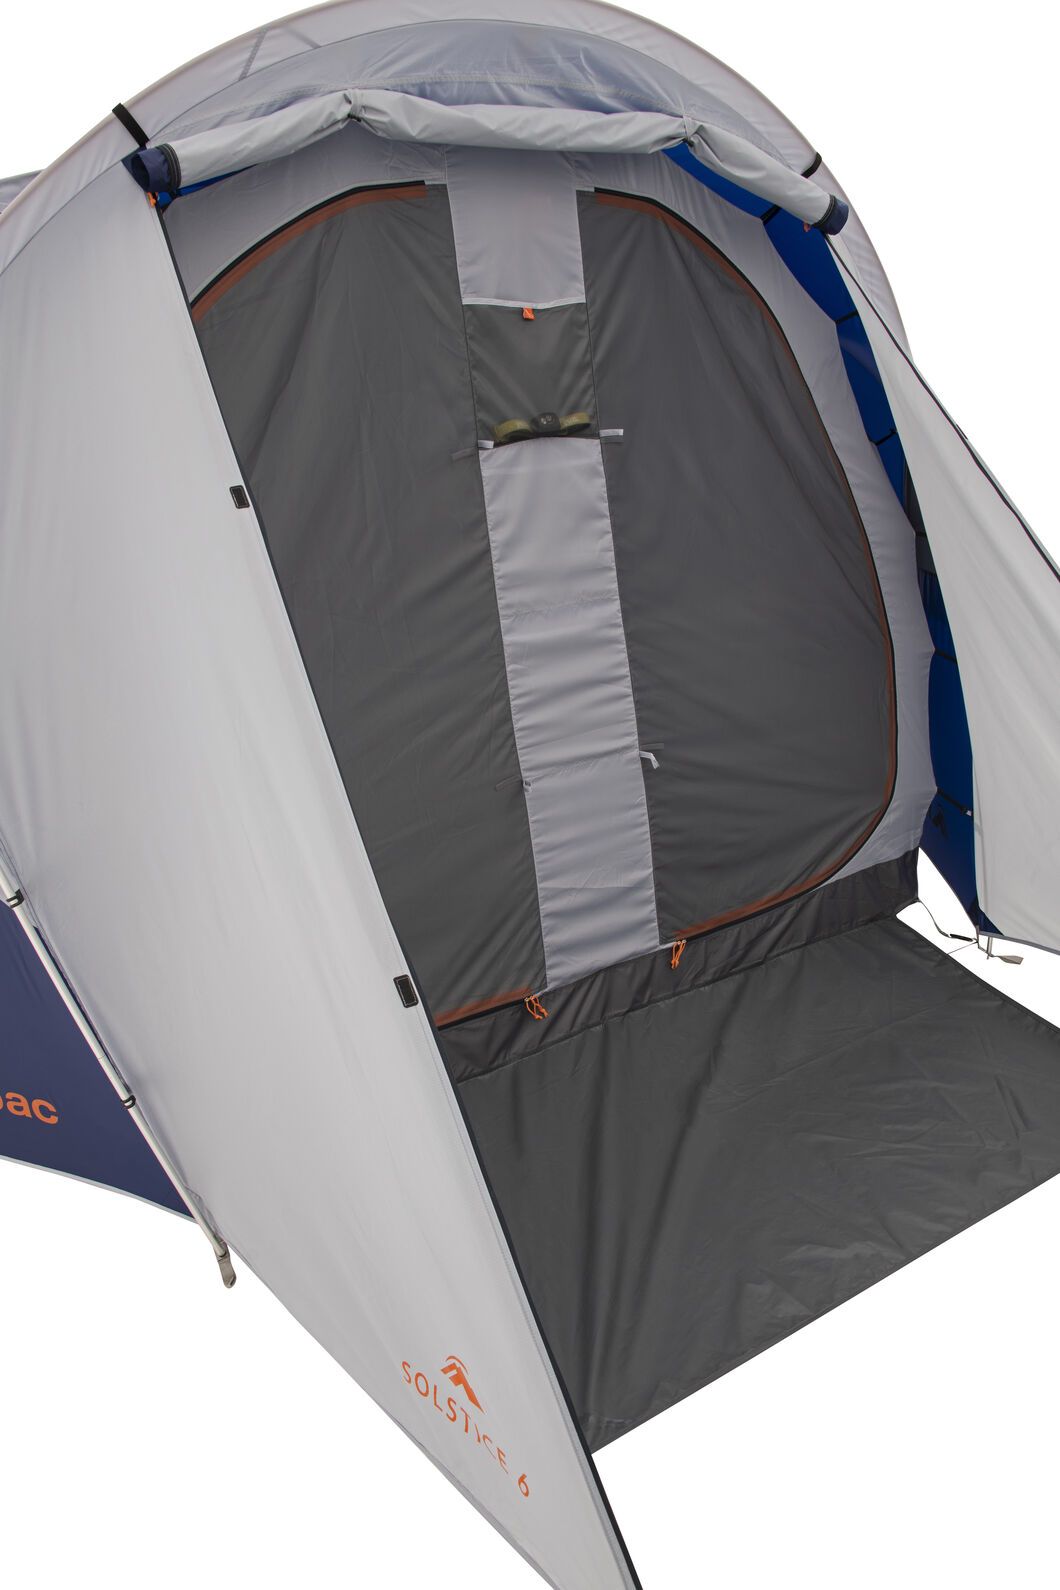 32 Popular Alpine design tent 6 person For Trend 2022